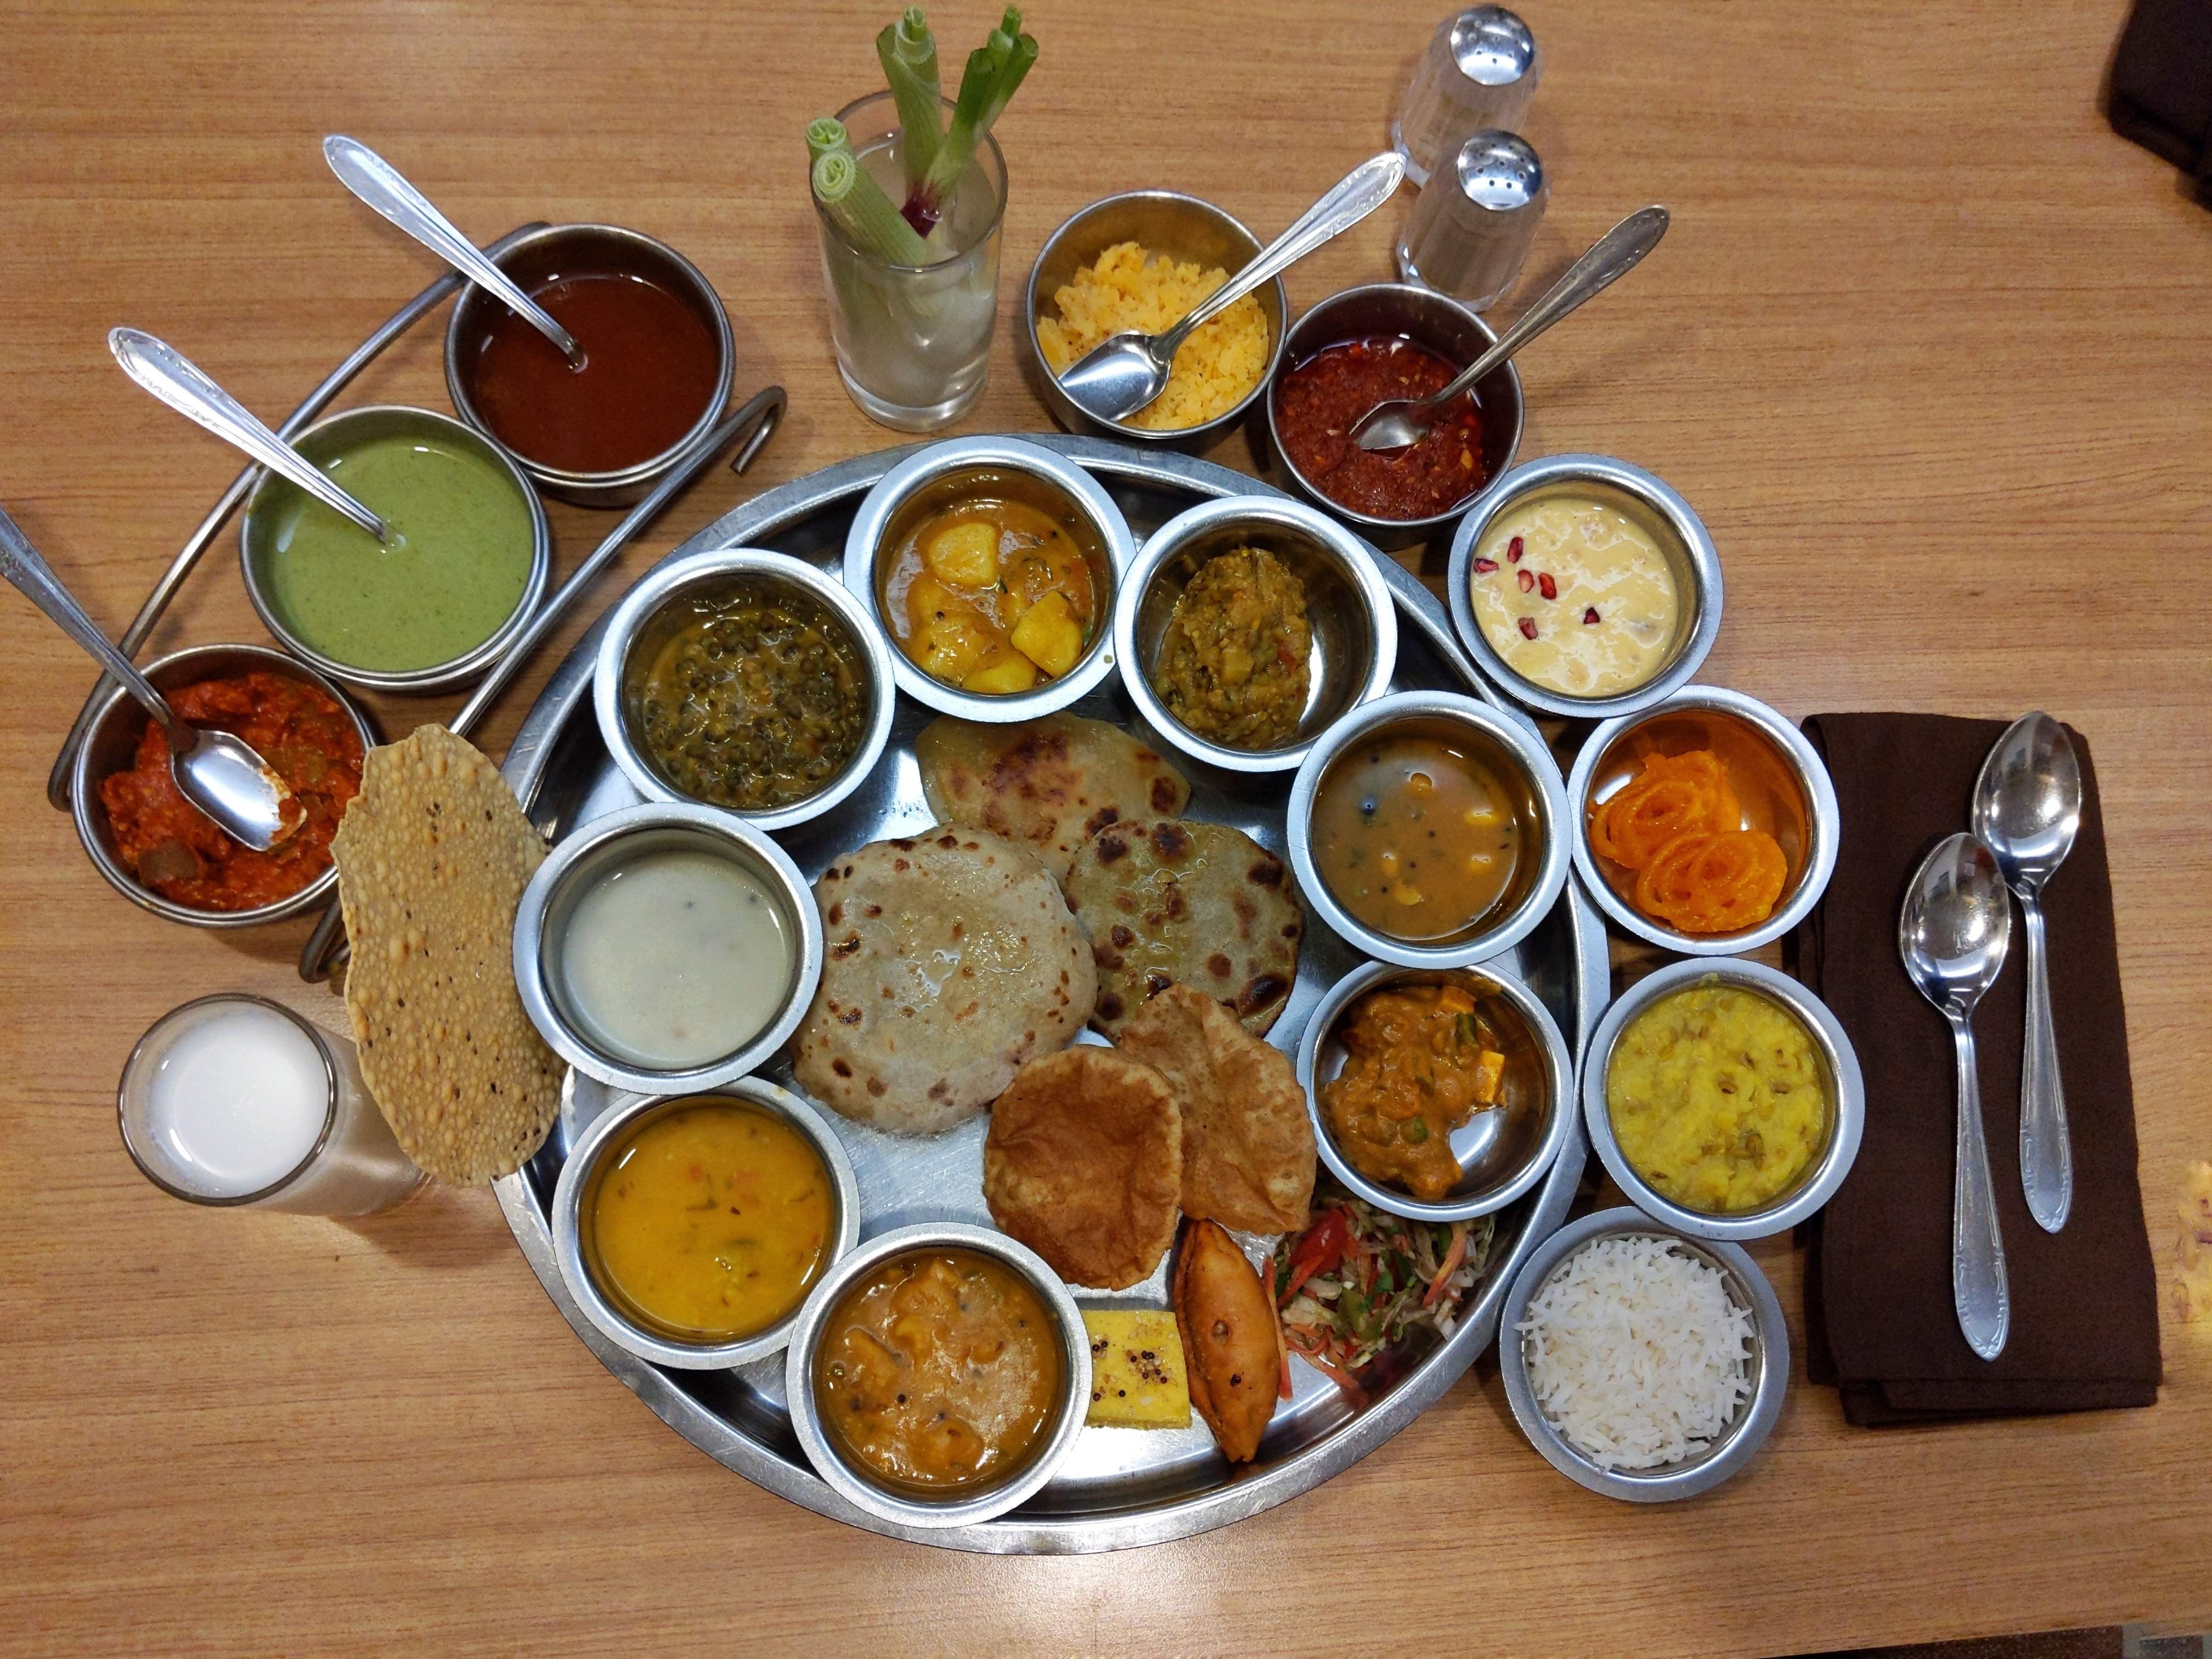 Dish,Food,Cuisine,Meal,Ingredient,Indian cuisine,Breakfast,Vegetarian food,Produce,Curry